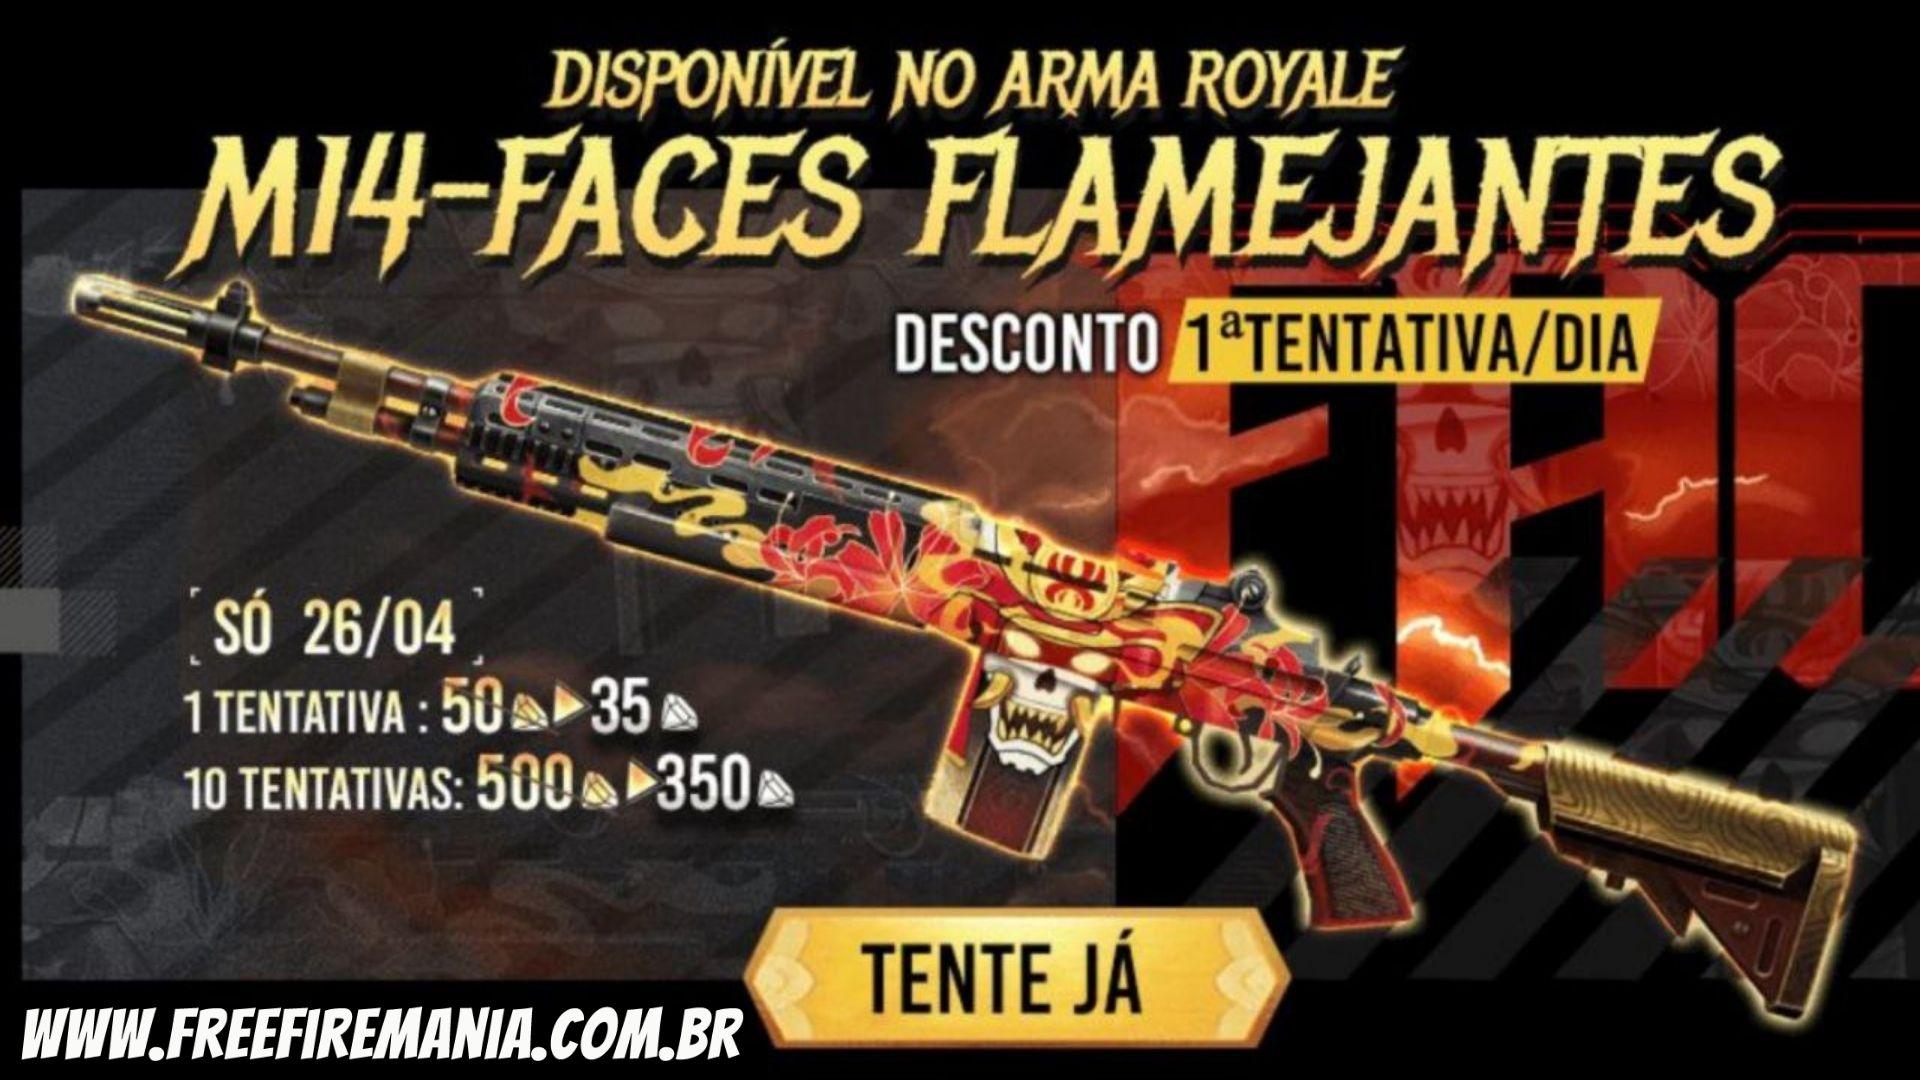 Free Fire libera nova M14 Faces Flamejantes no Sorte Royale